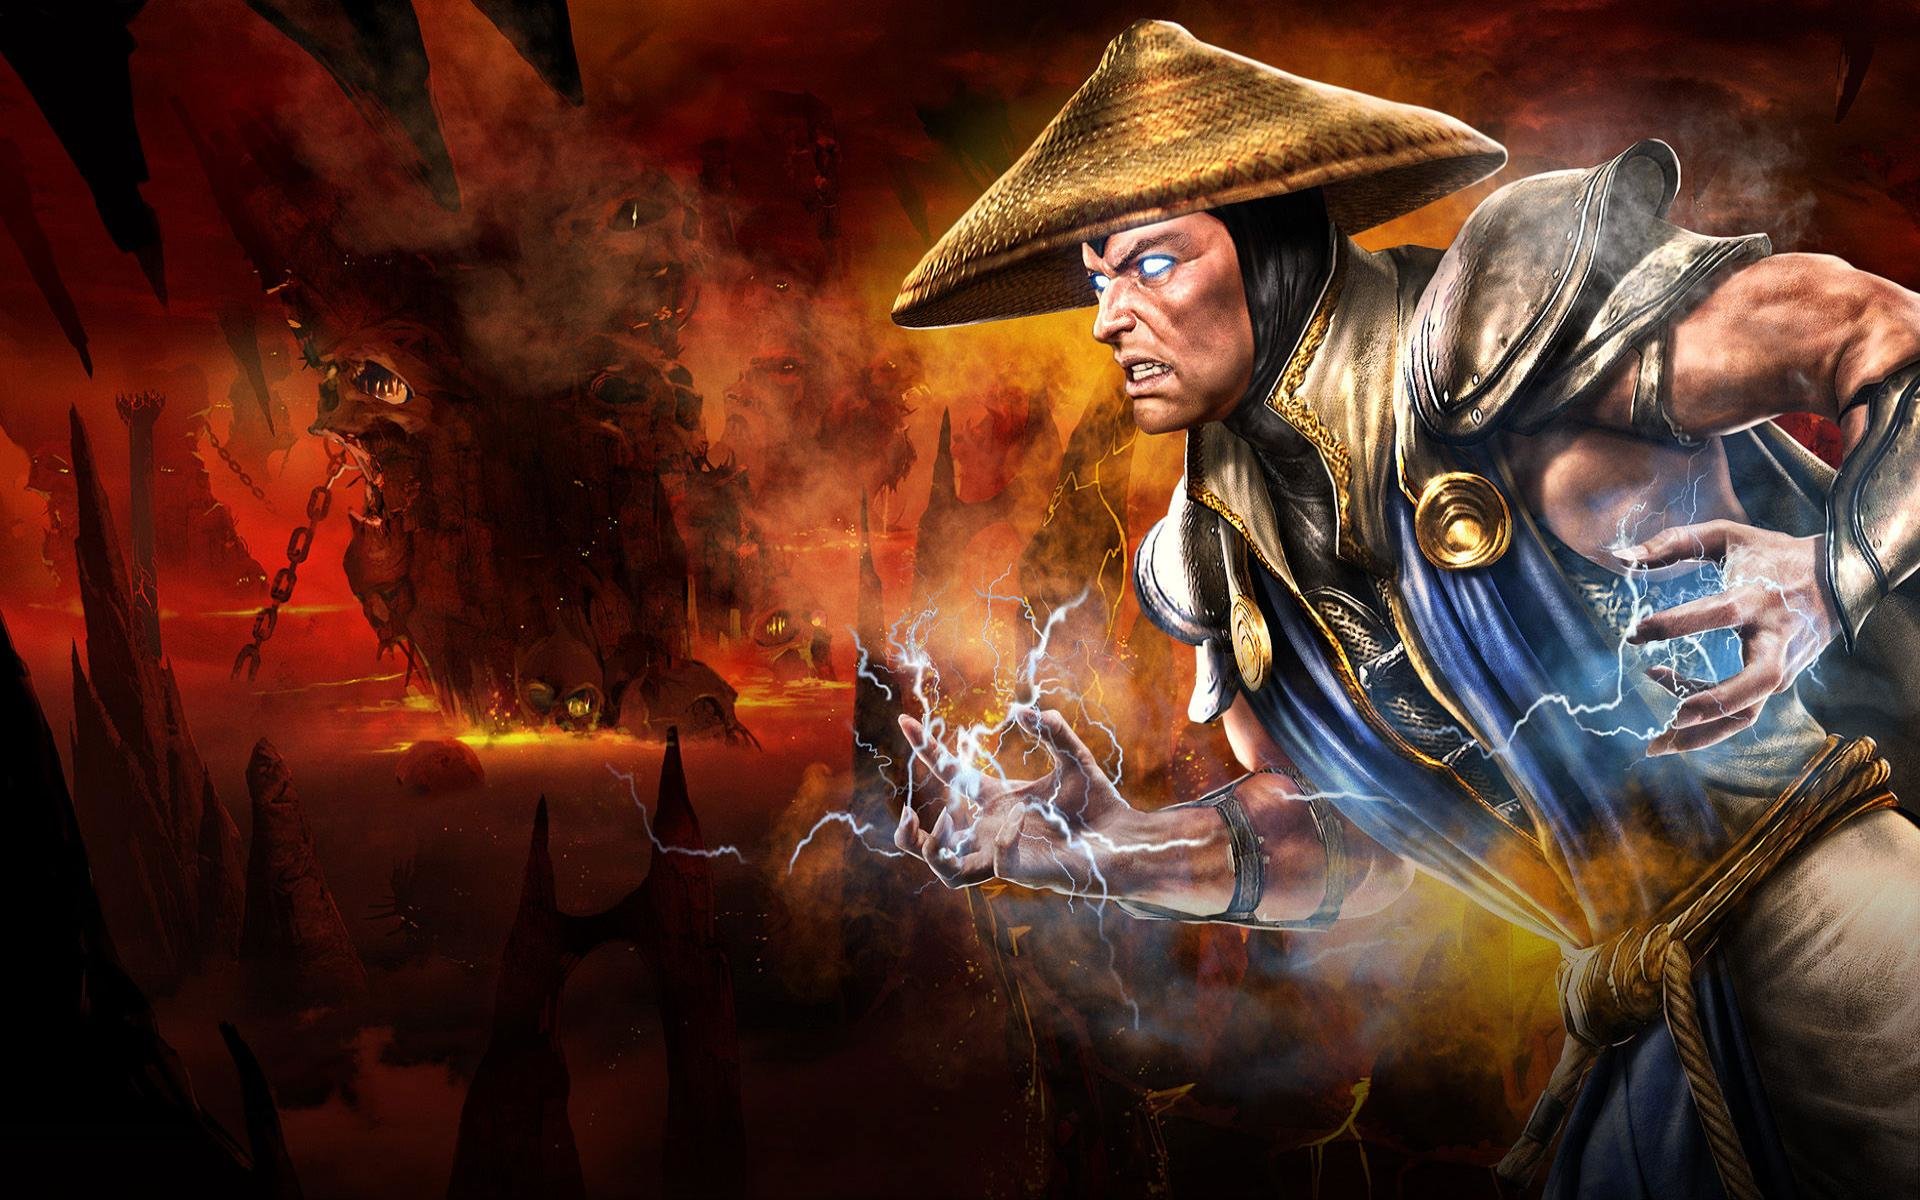 Mortal Kombat Vs. DC Universe wallpapers HD for desktop backgrounds